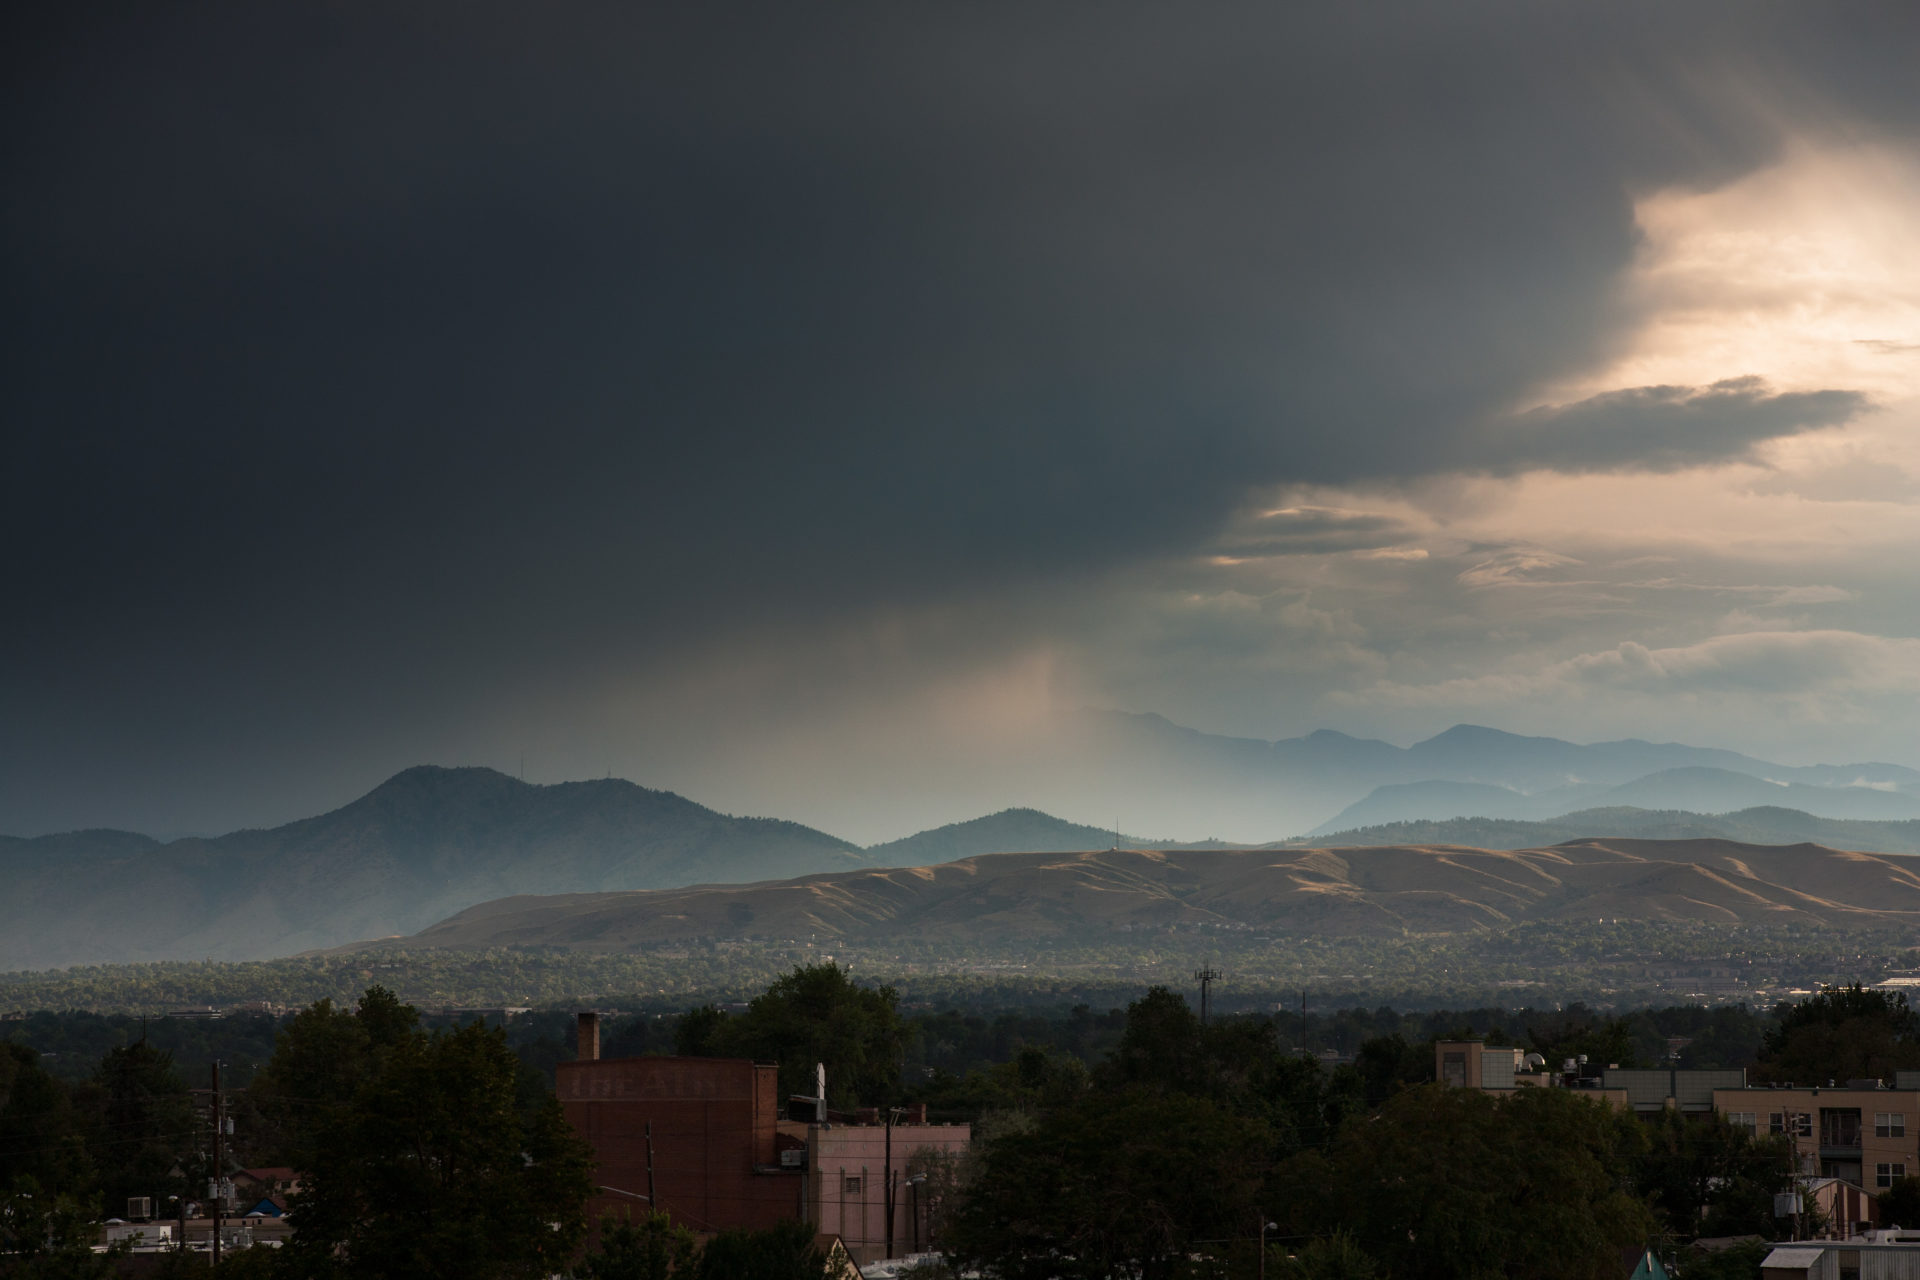 Mount Evans storm - August 27, 2011